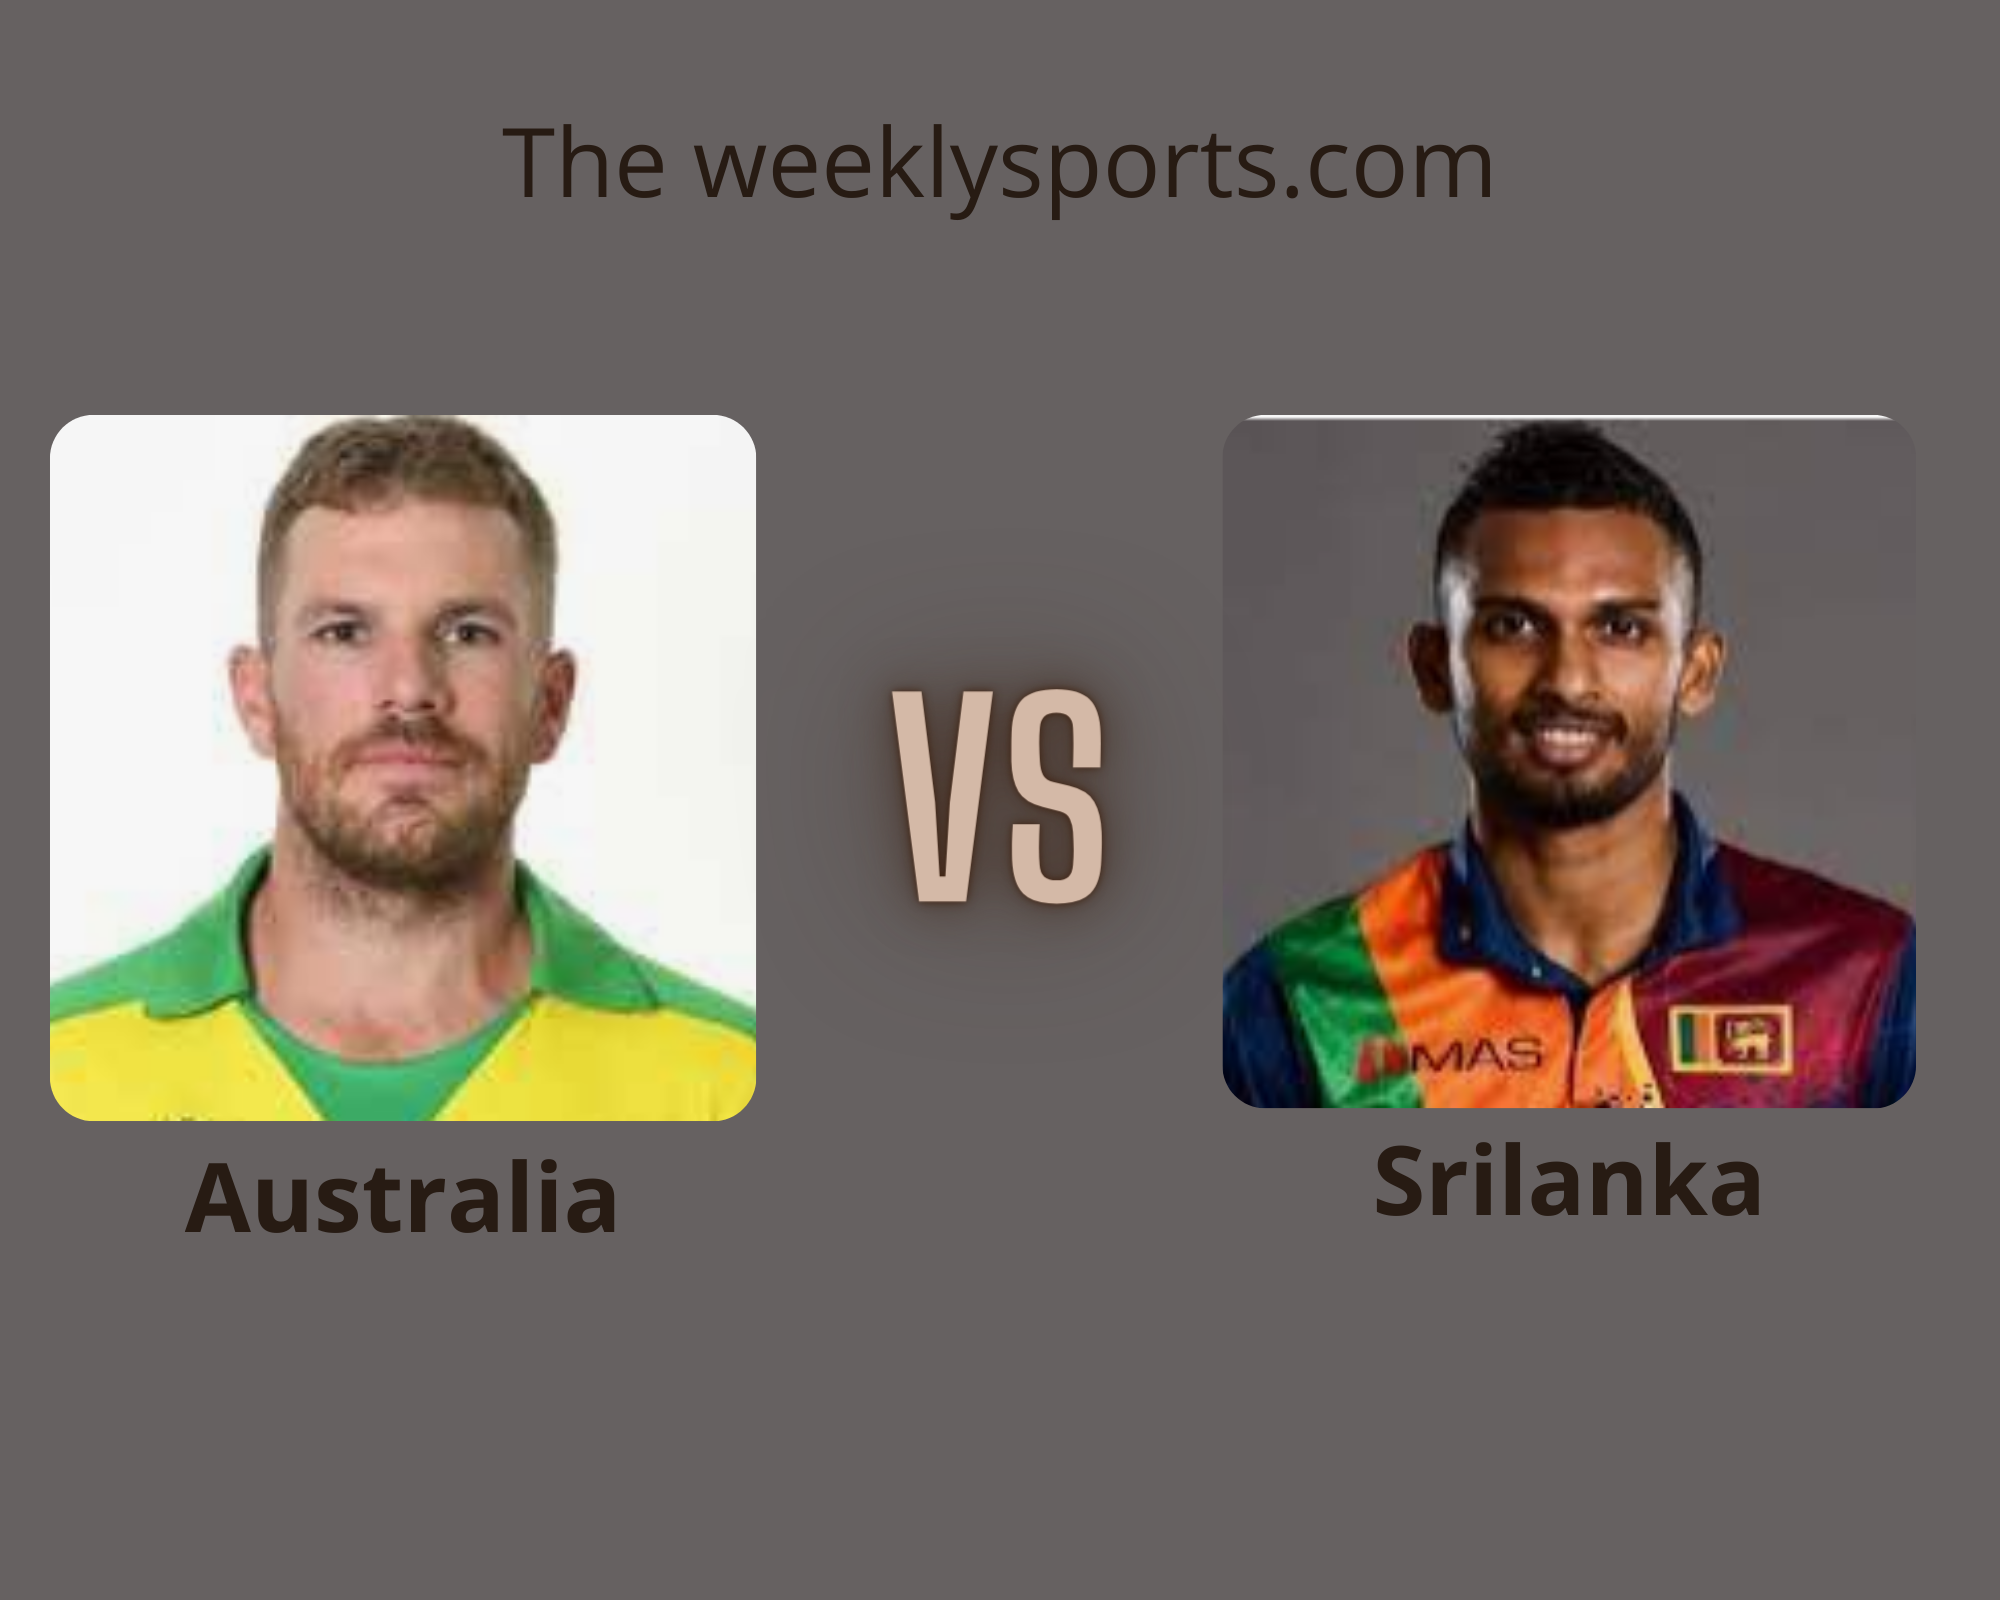 Austrialia vs Srilanka head to head batting and bowling stats